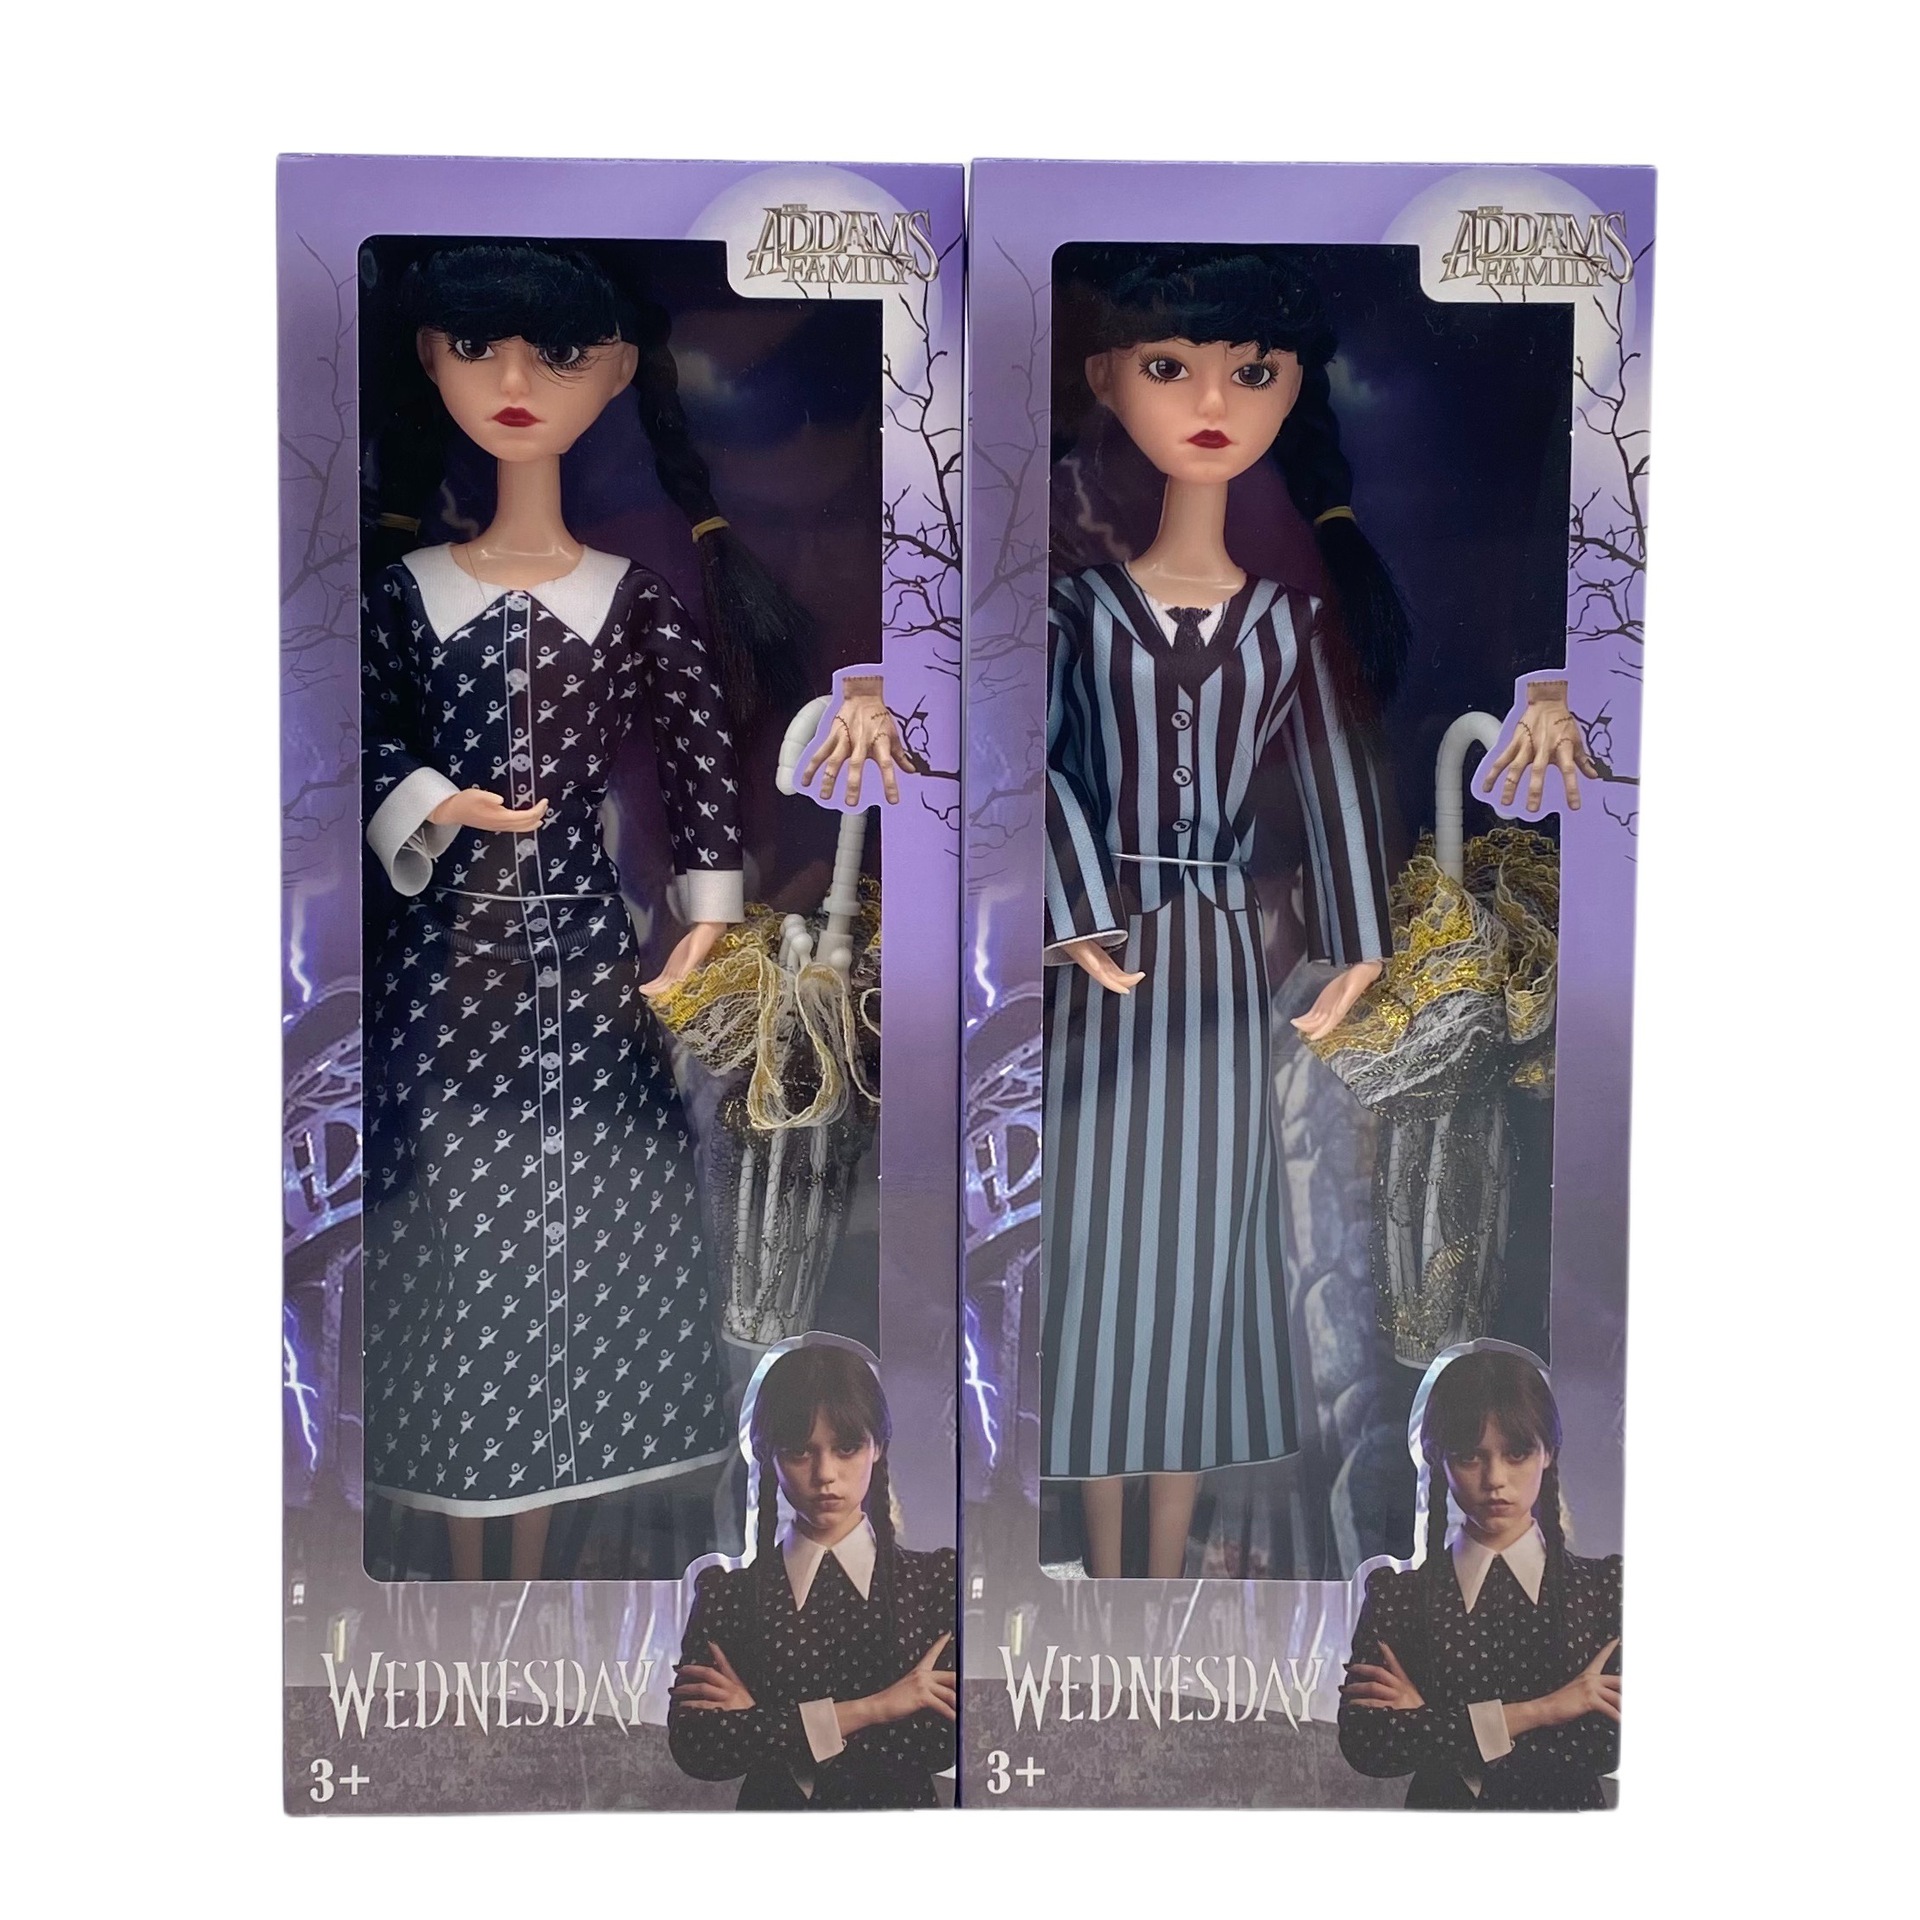 Loofamy Wednesday Addams Dolls, Addams Family Plastic Doll, 11.5 inch, Short Sleeve Striped Dress, Birthday Gifts for Kids Girls Fans